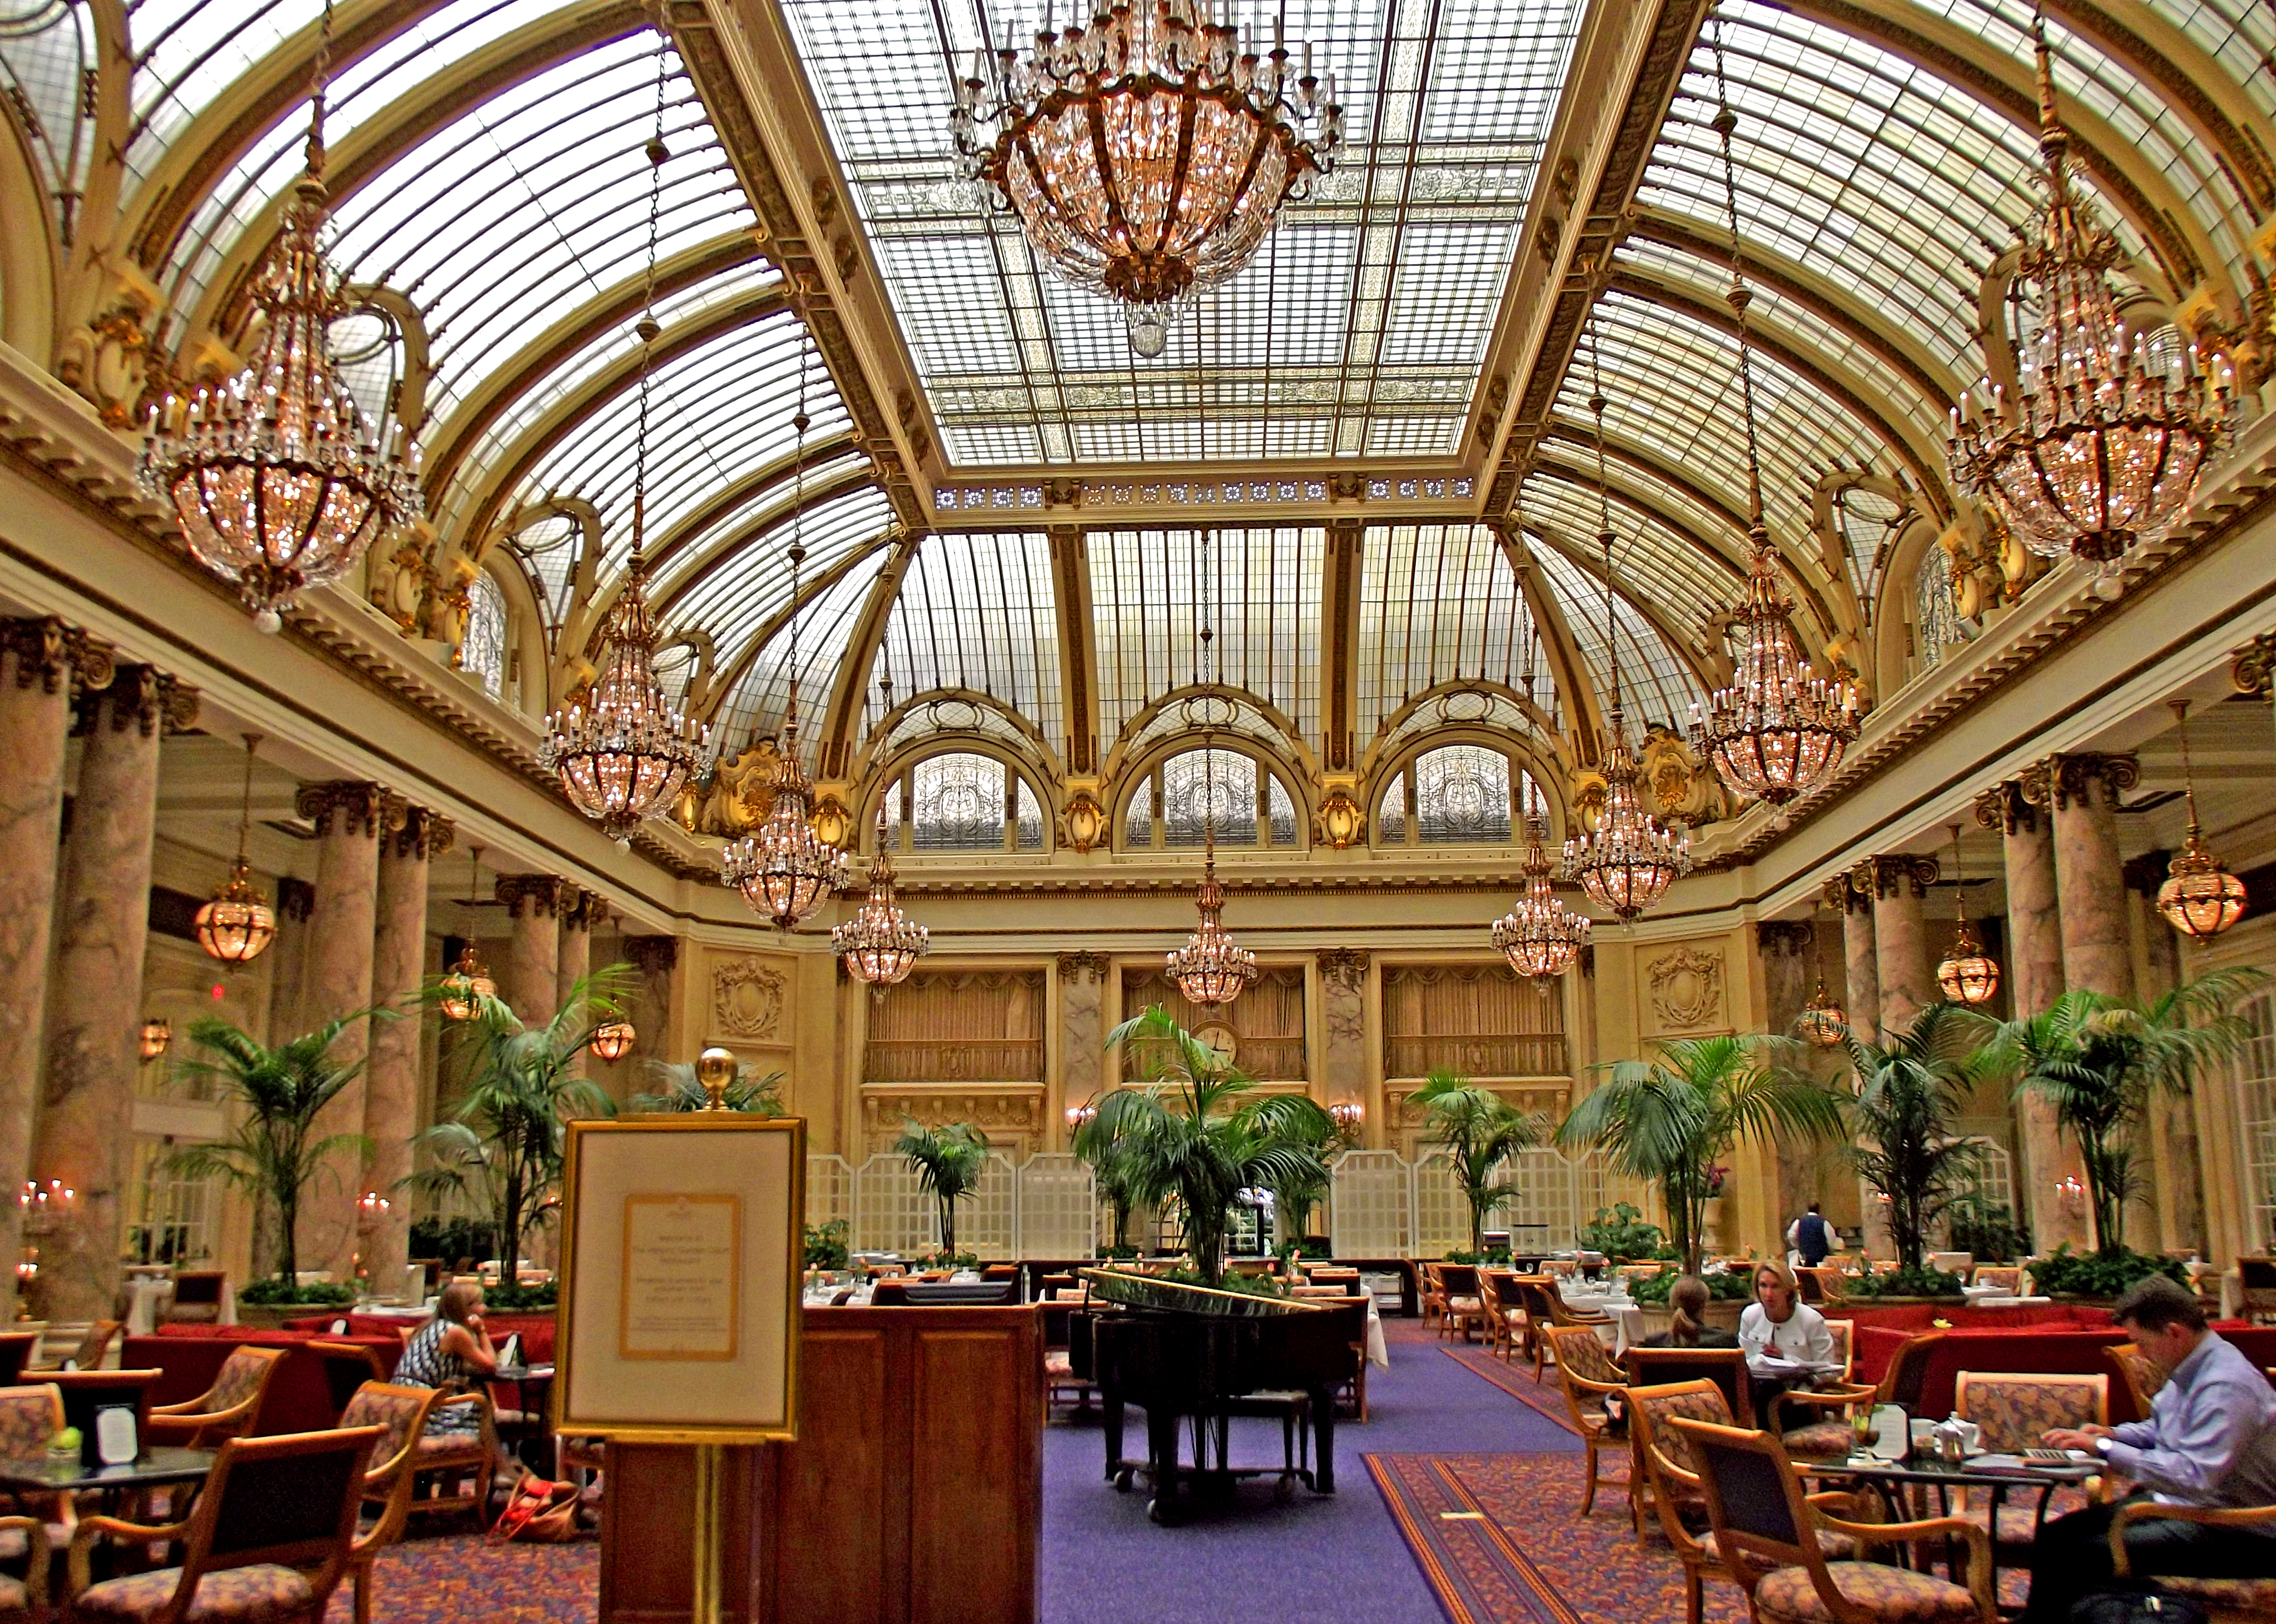 File:Palace Hotel, Garden Court Restaurant 2.jpg - Wikimedia Commons